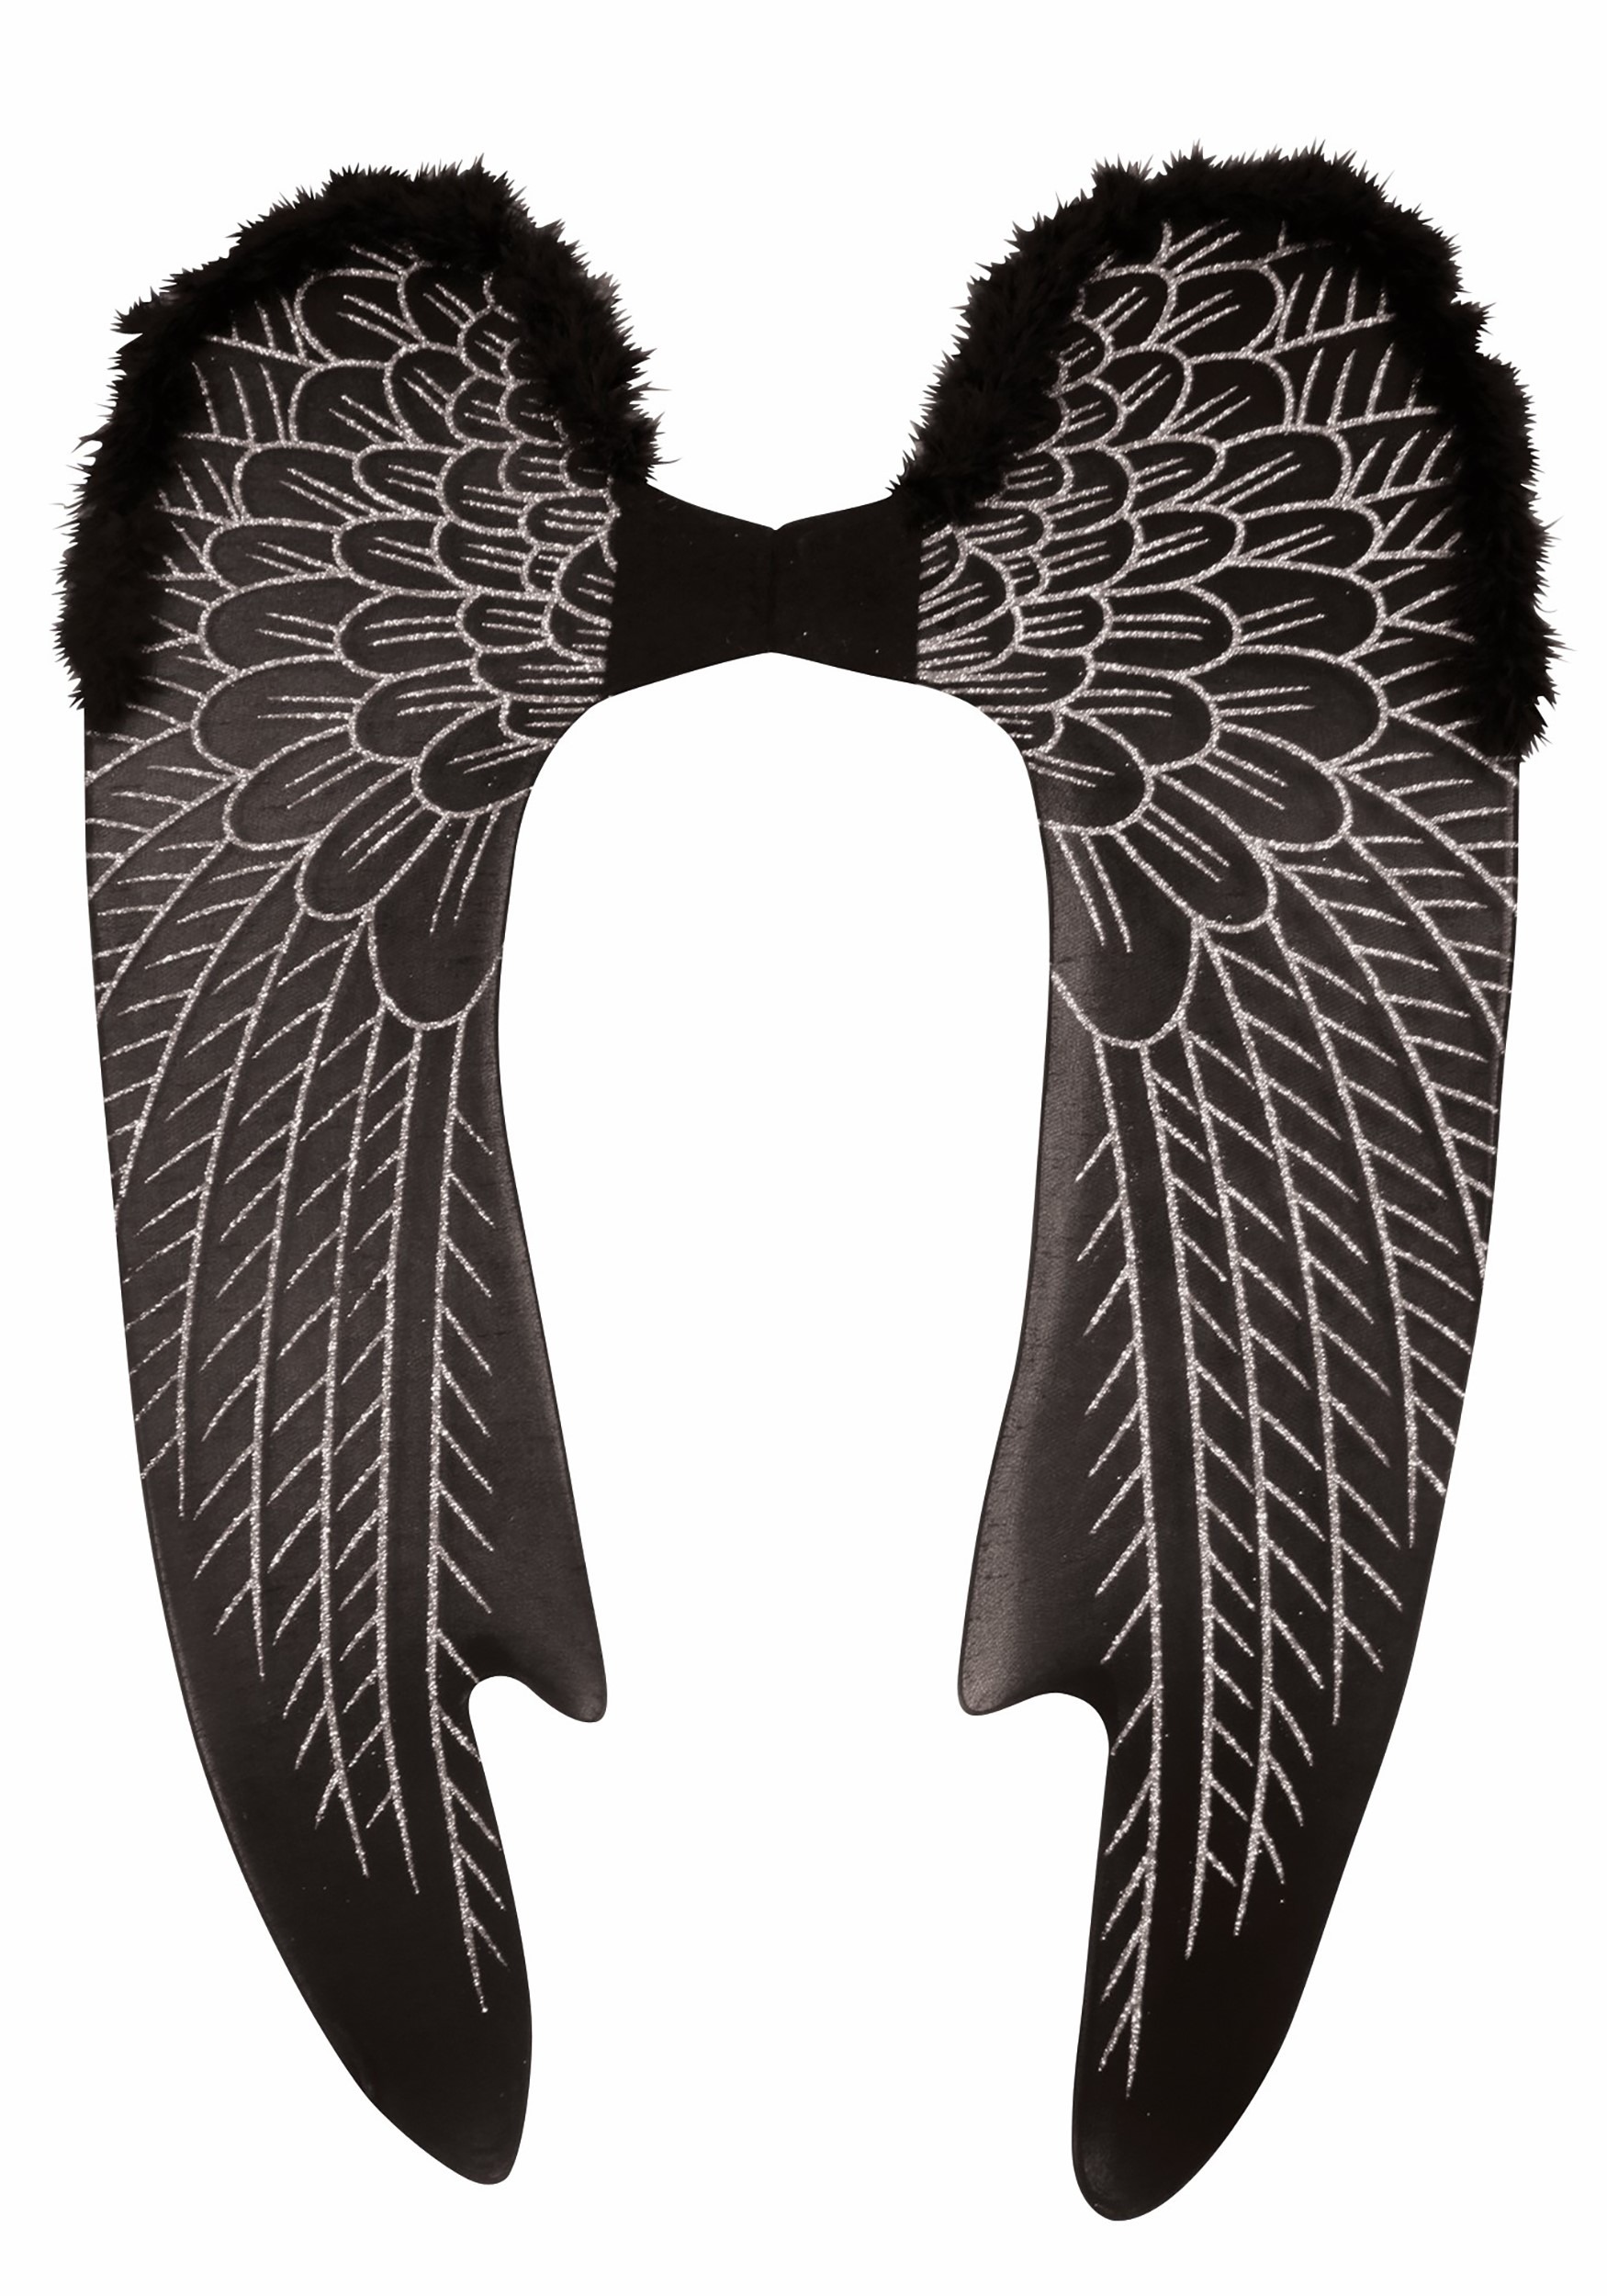 Крылья картинки. Крылья ангела. Черные Крылья. Крылья ангела черные. Ангел с крыльями.